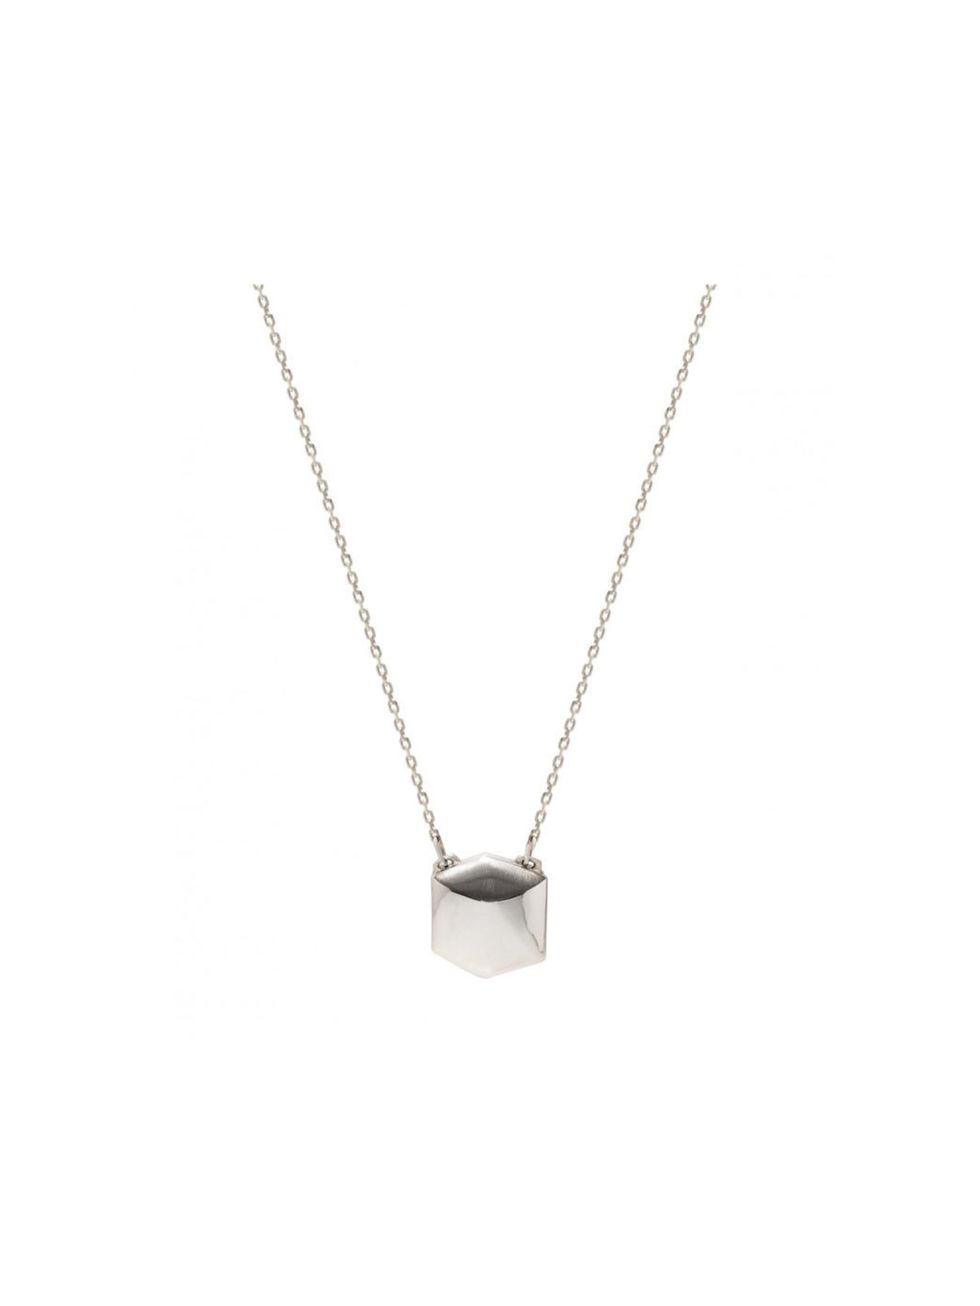 <p>Emilie Morris silver-black square shield necklace, £370, at <a href="http://www.kabiri.co.uk/designers/emilie-morris/silver-black-square-shield-necklace.html">Kabiri</a></p>